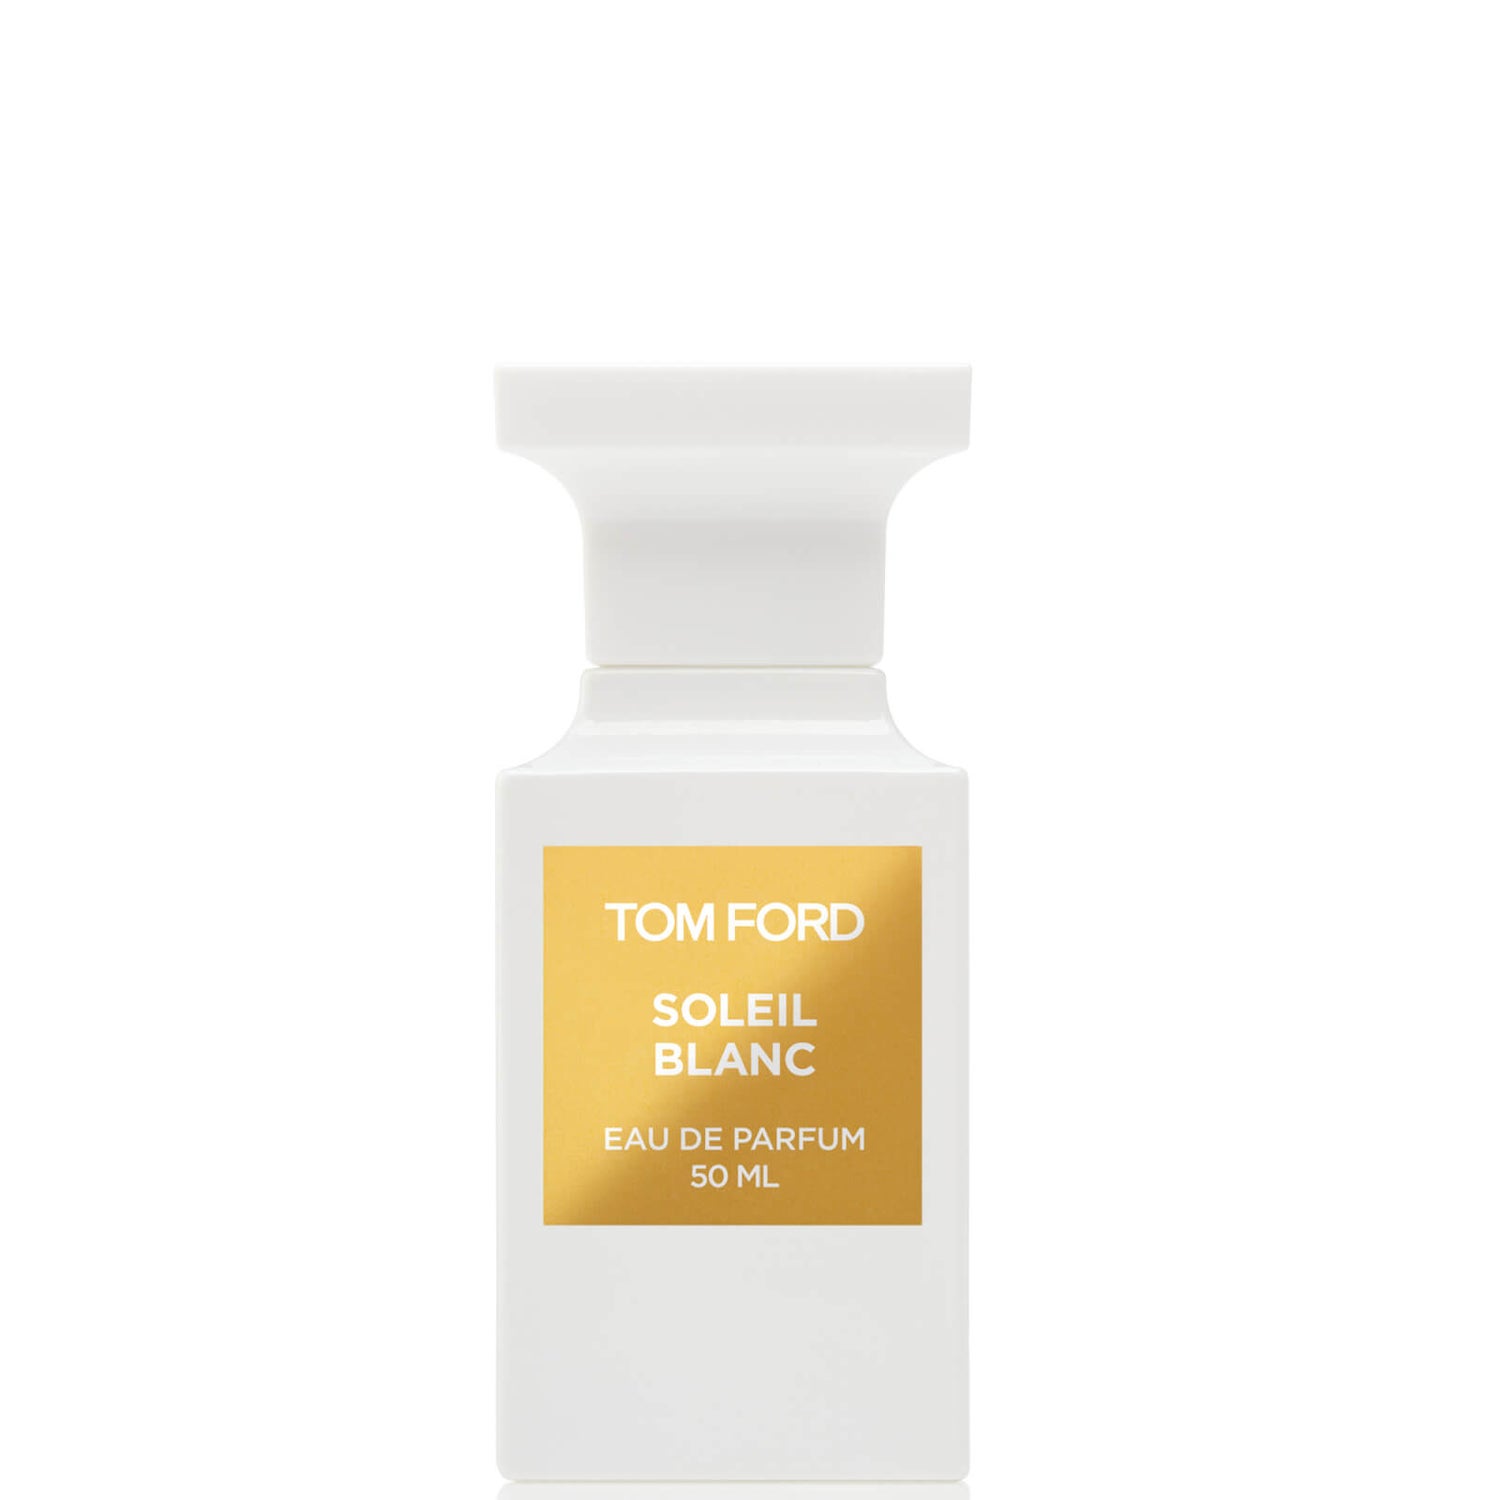 Tom Ford Soleil Blanc -- Eau de Parfum Spray - 50ml Tom Ford Soleil Blanc -- parfémovaná voda ve spreji - 50 ml